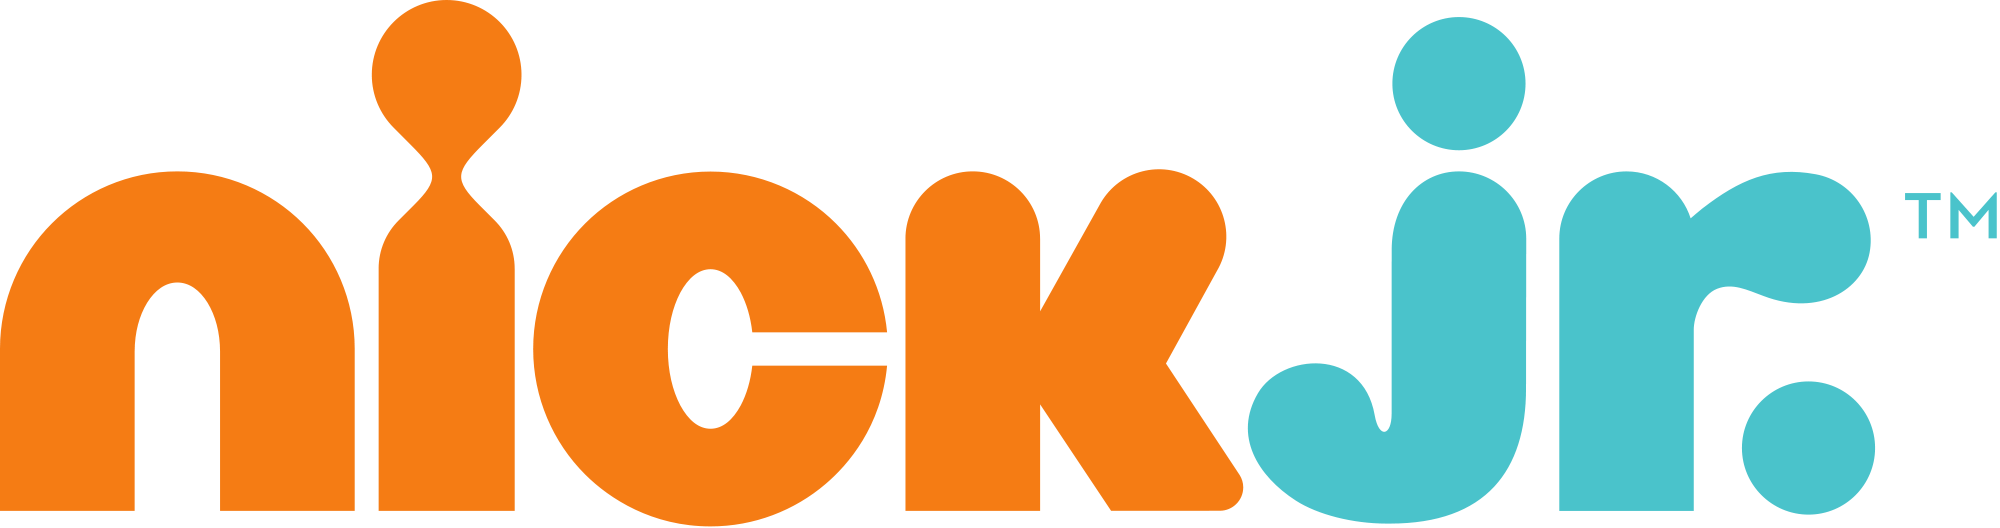 Nick Jr - - Nick Jr Logo (2000x528)